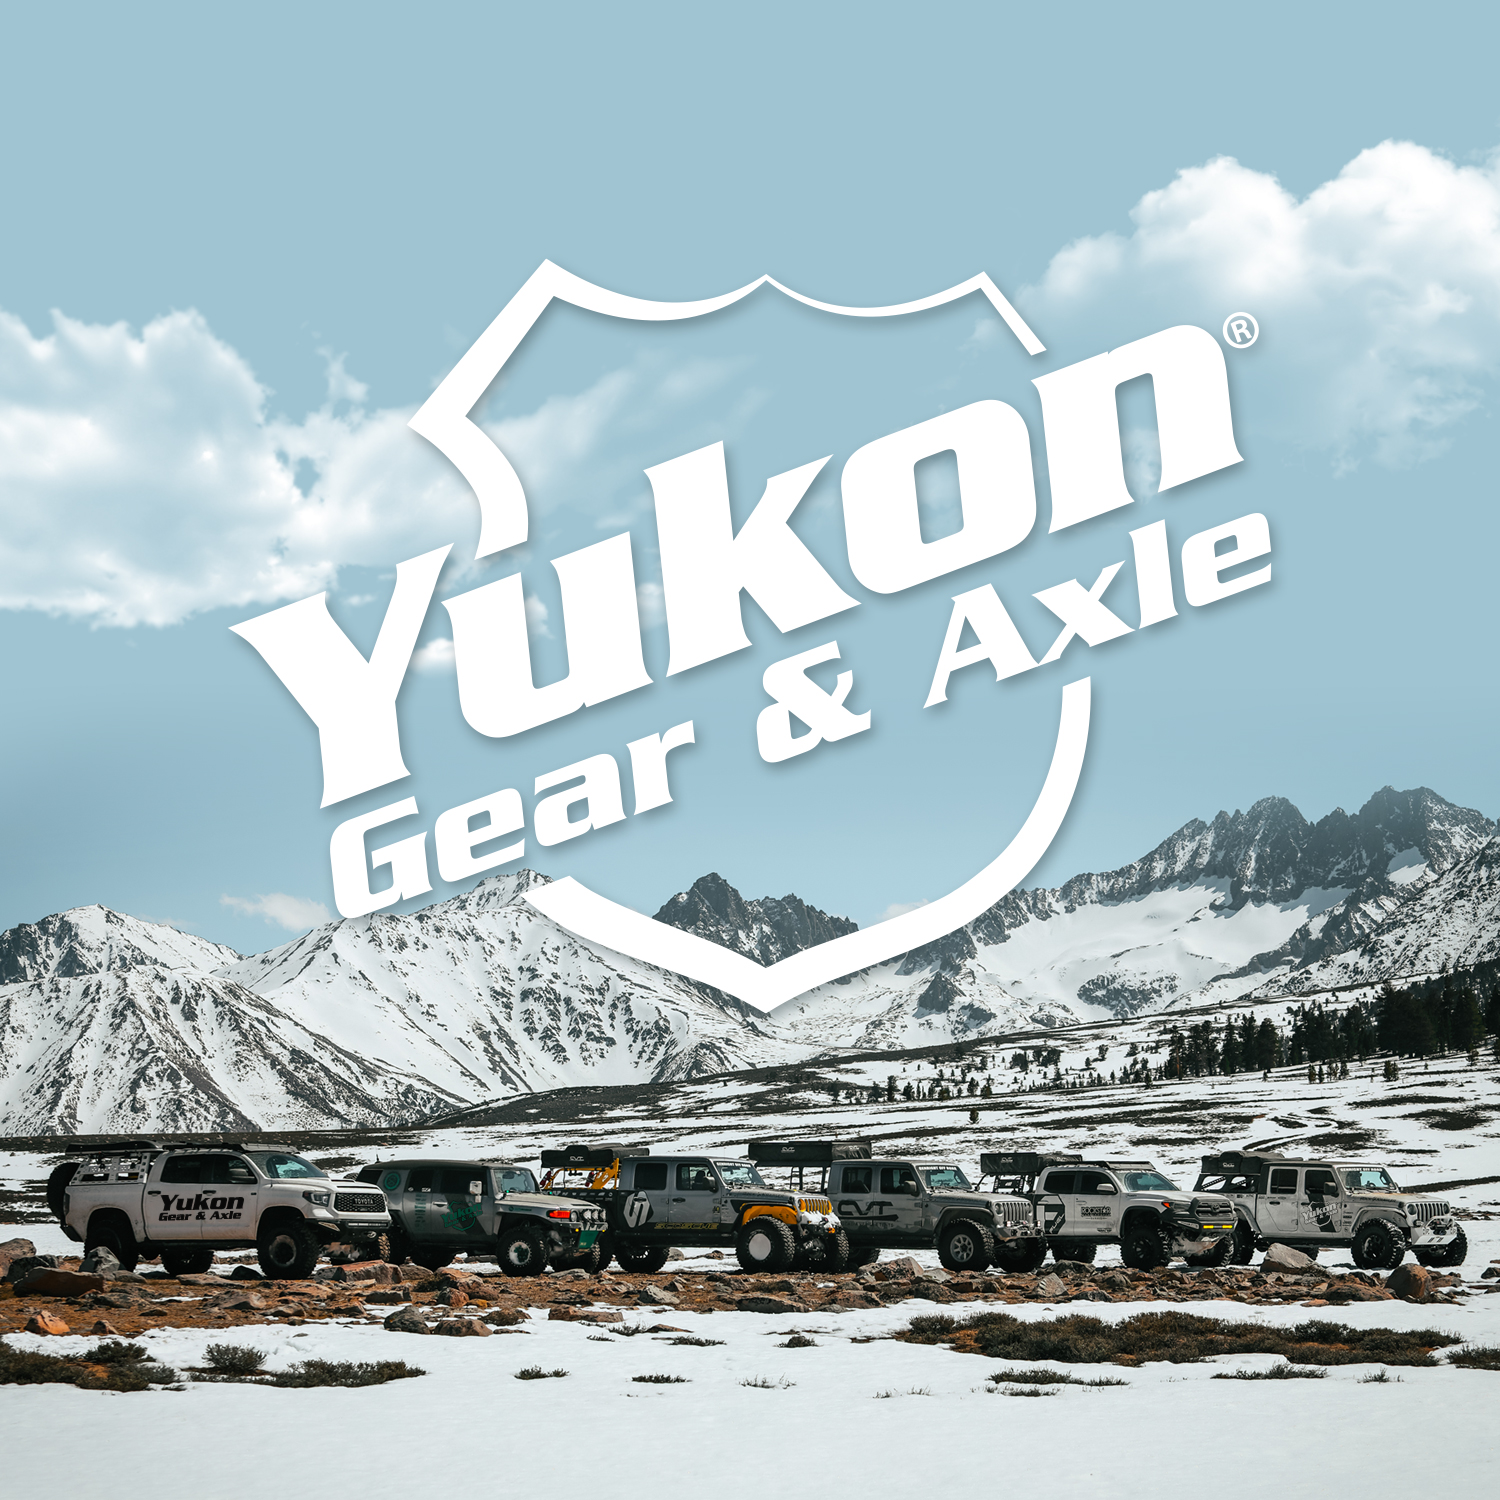 High performance Yukon Ring & Pinion gear set for GM 12 bolt car in a 4.56 ratio